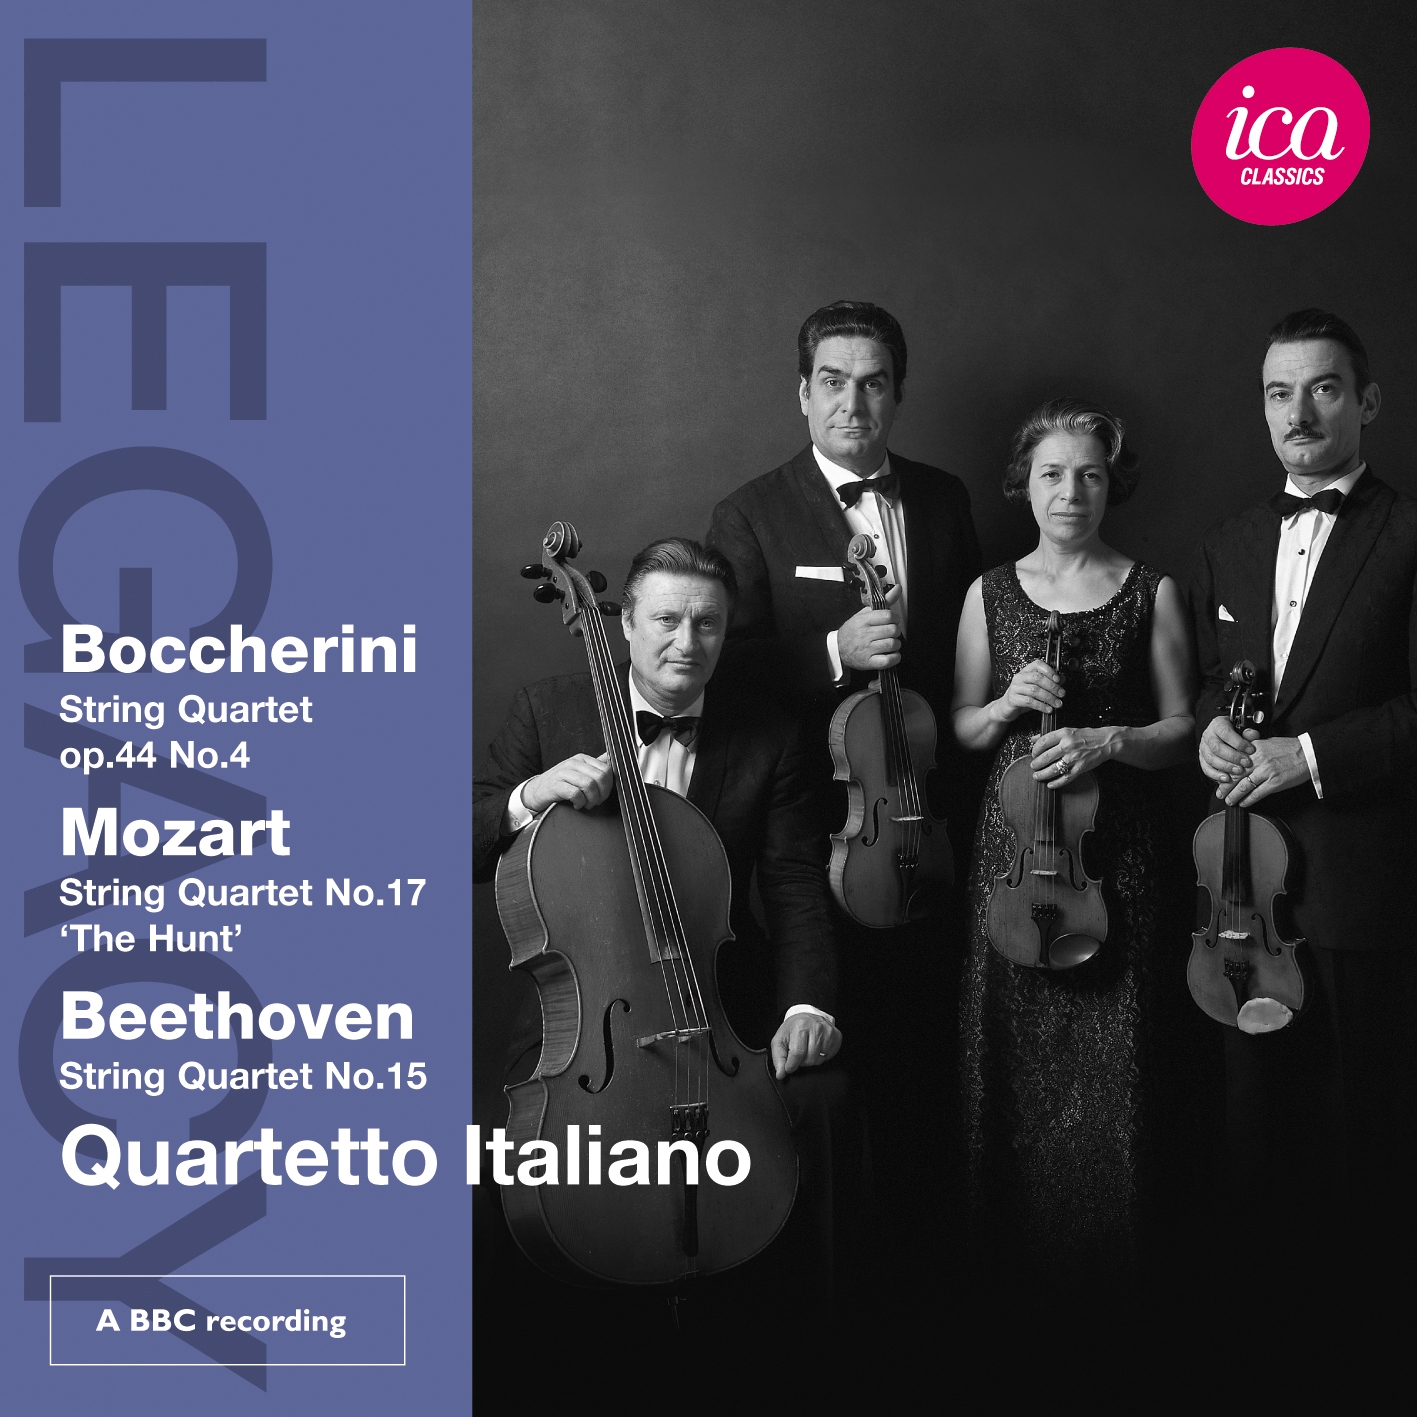 Quartetto Italiano Ica Classics